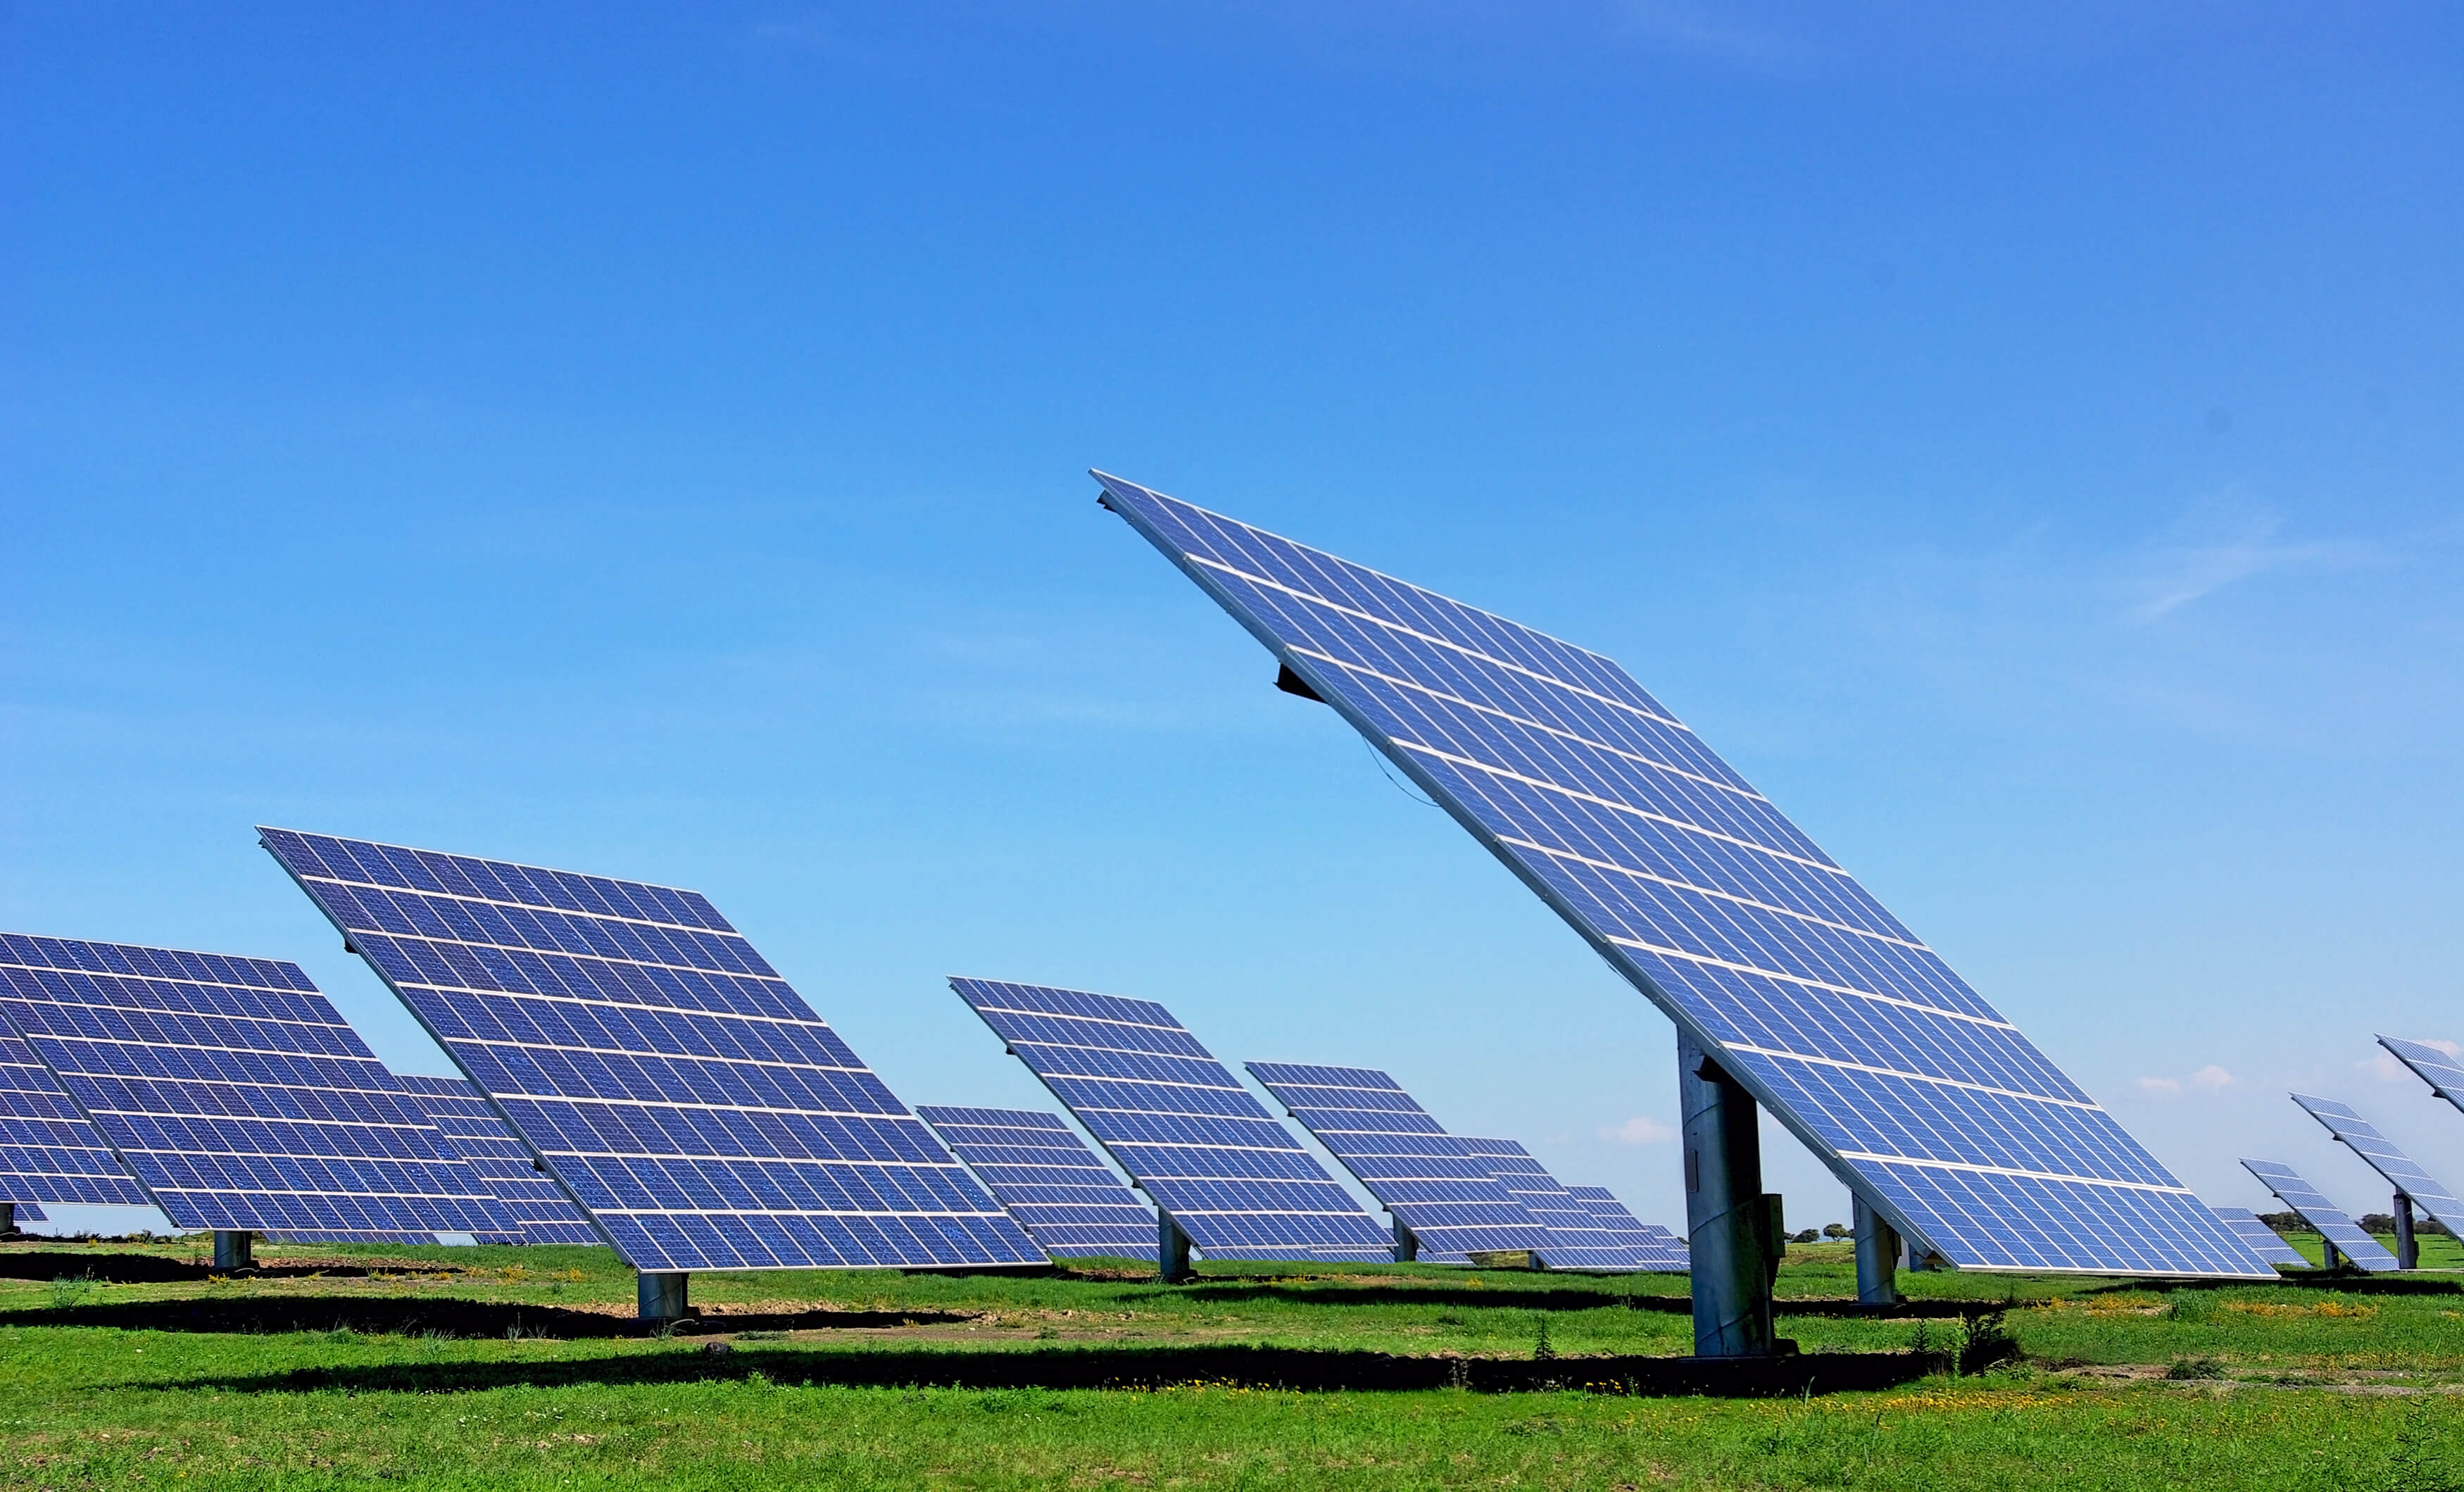 Orientation, Tilt and Shading Affect Solar Power Output